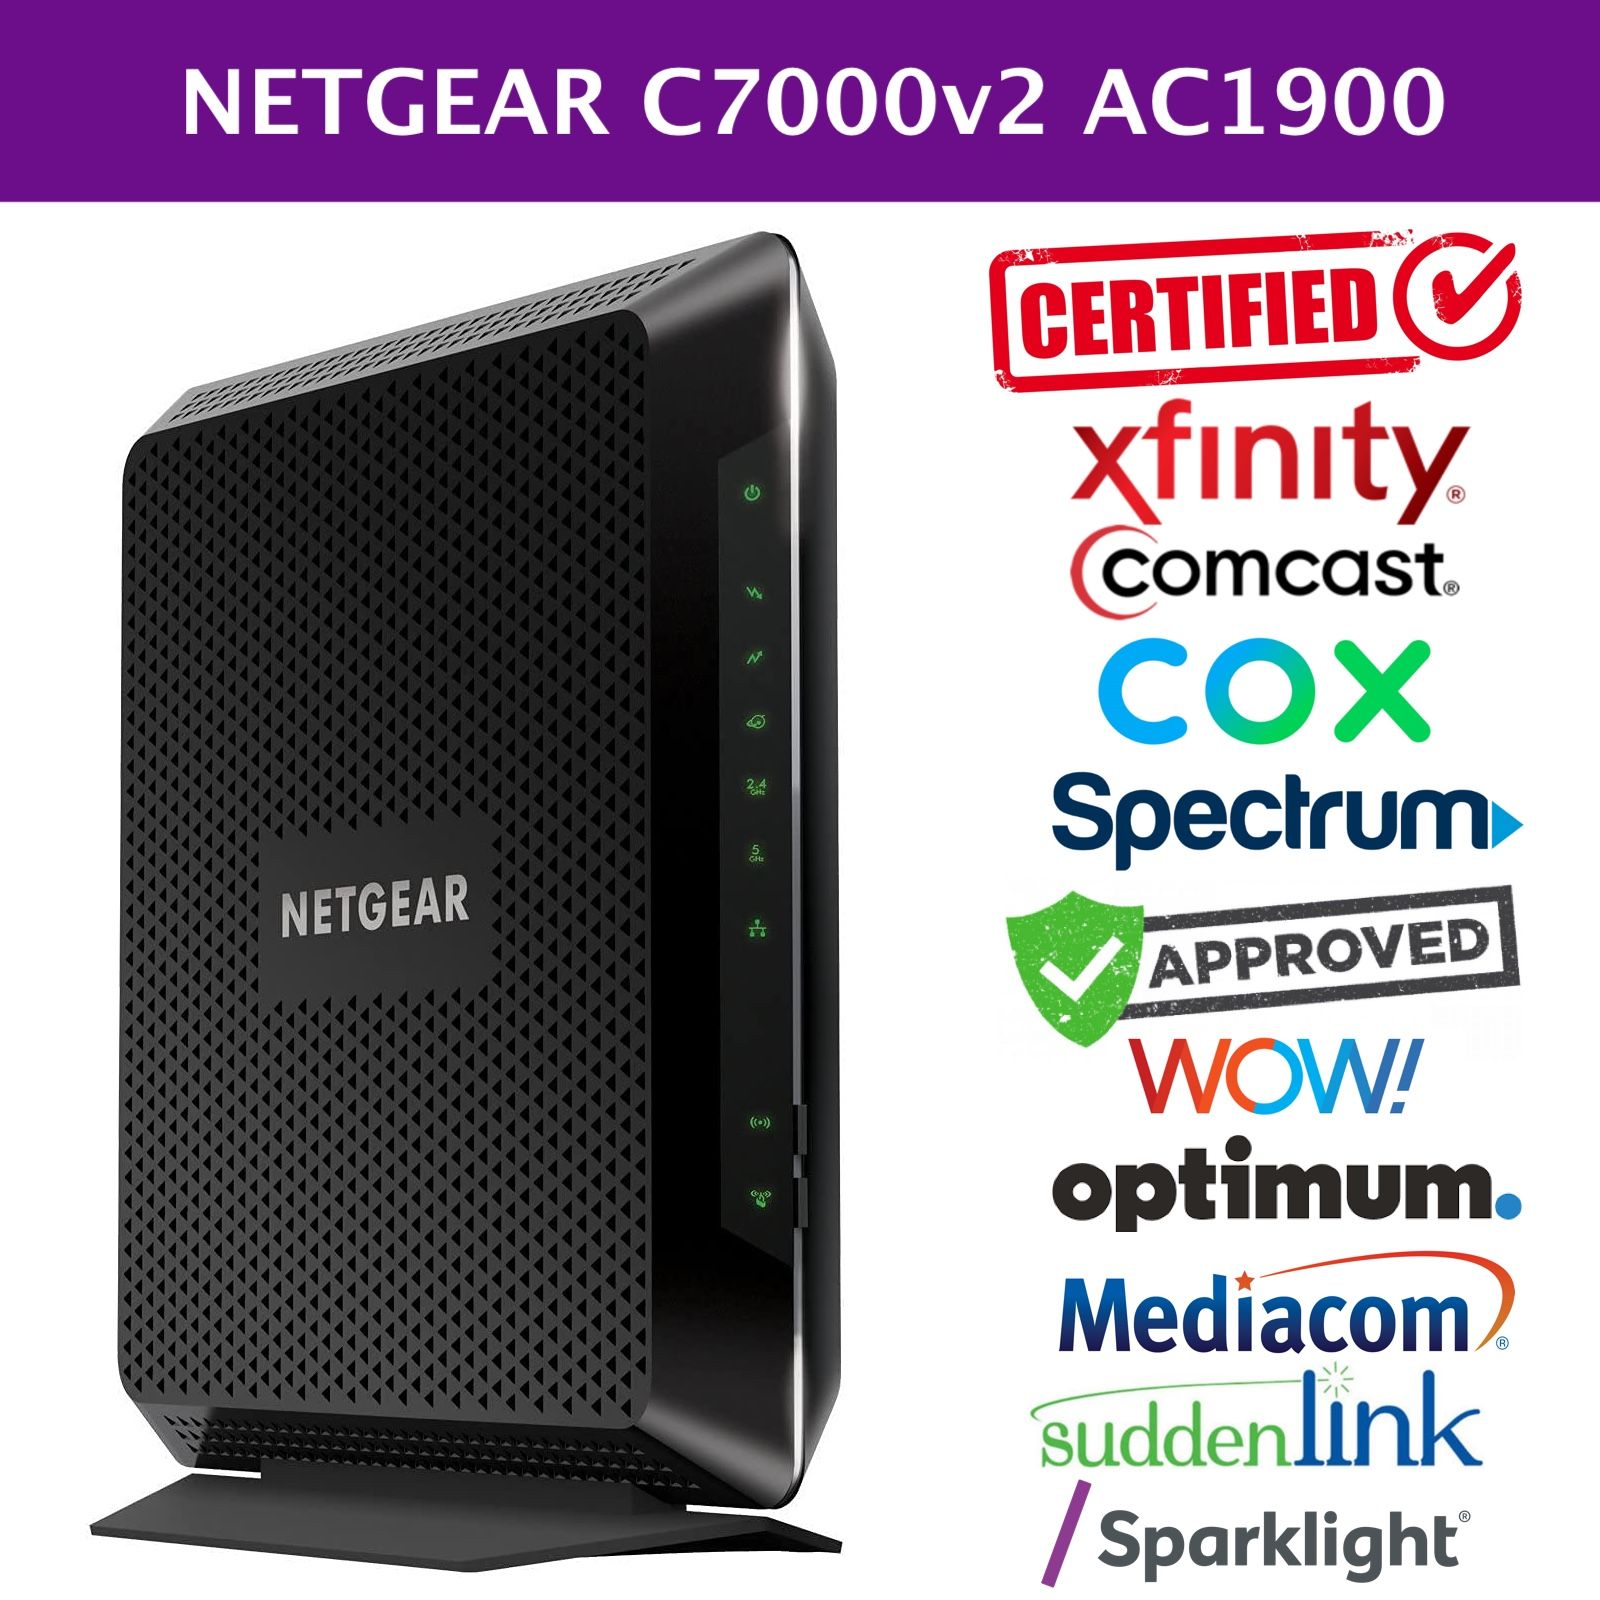 Netgear AC 1900 C7000v2 Modem+router Combo For Sale 